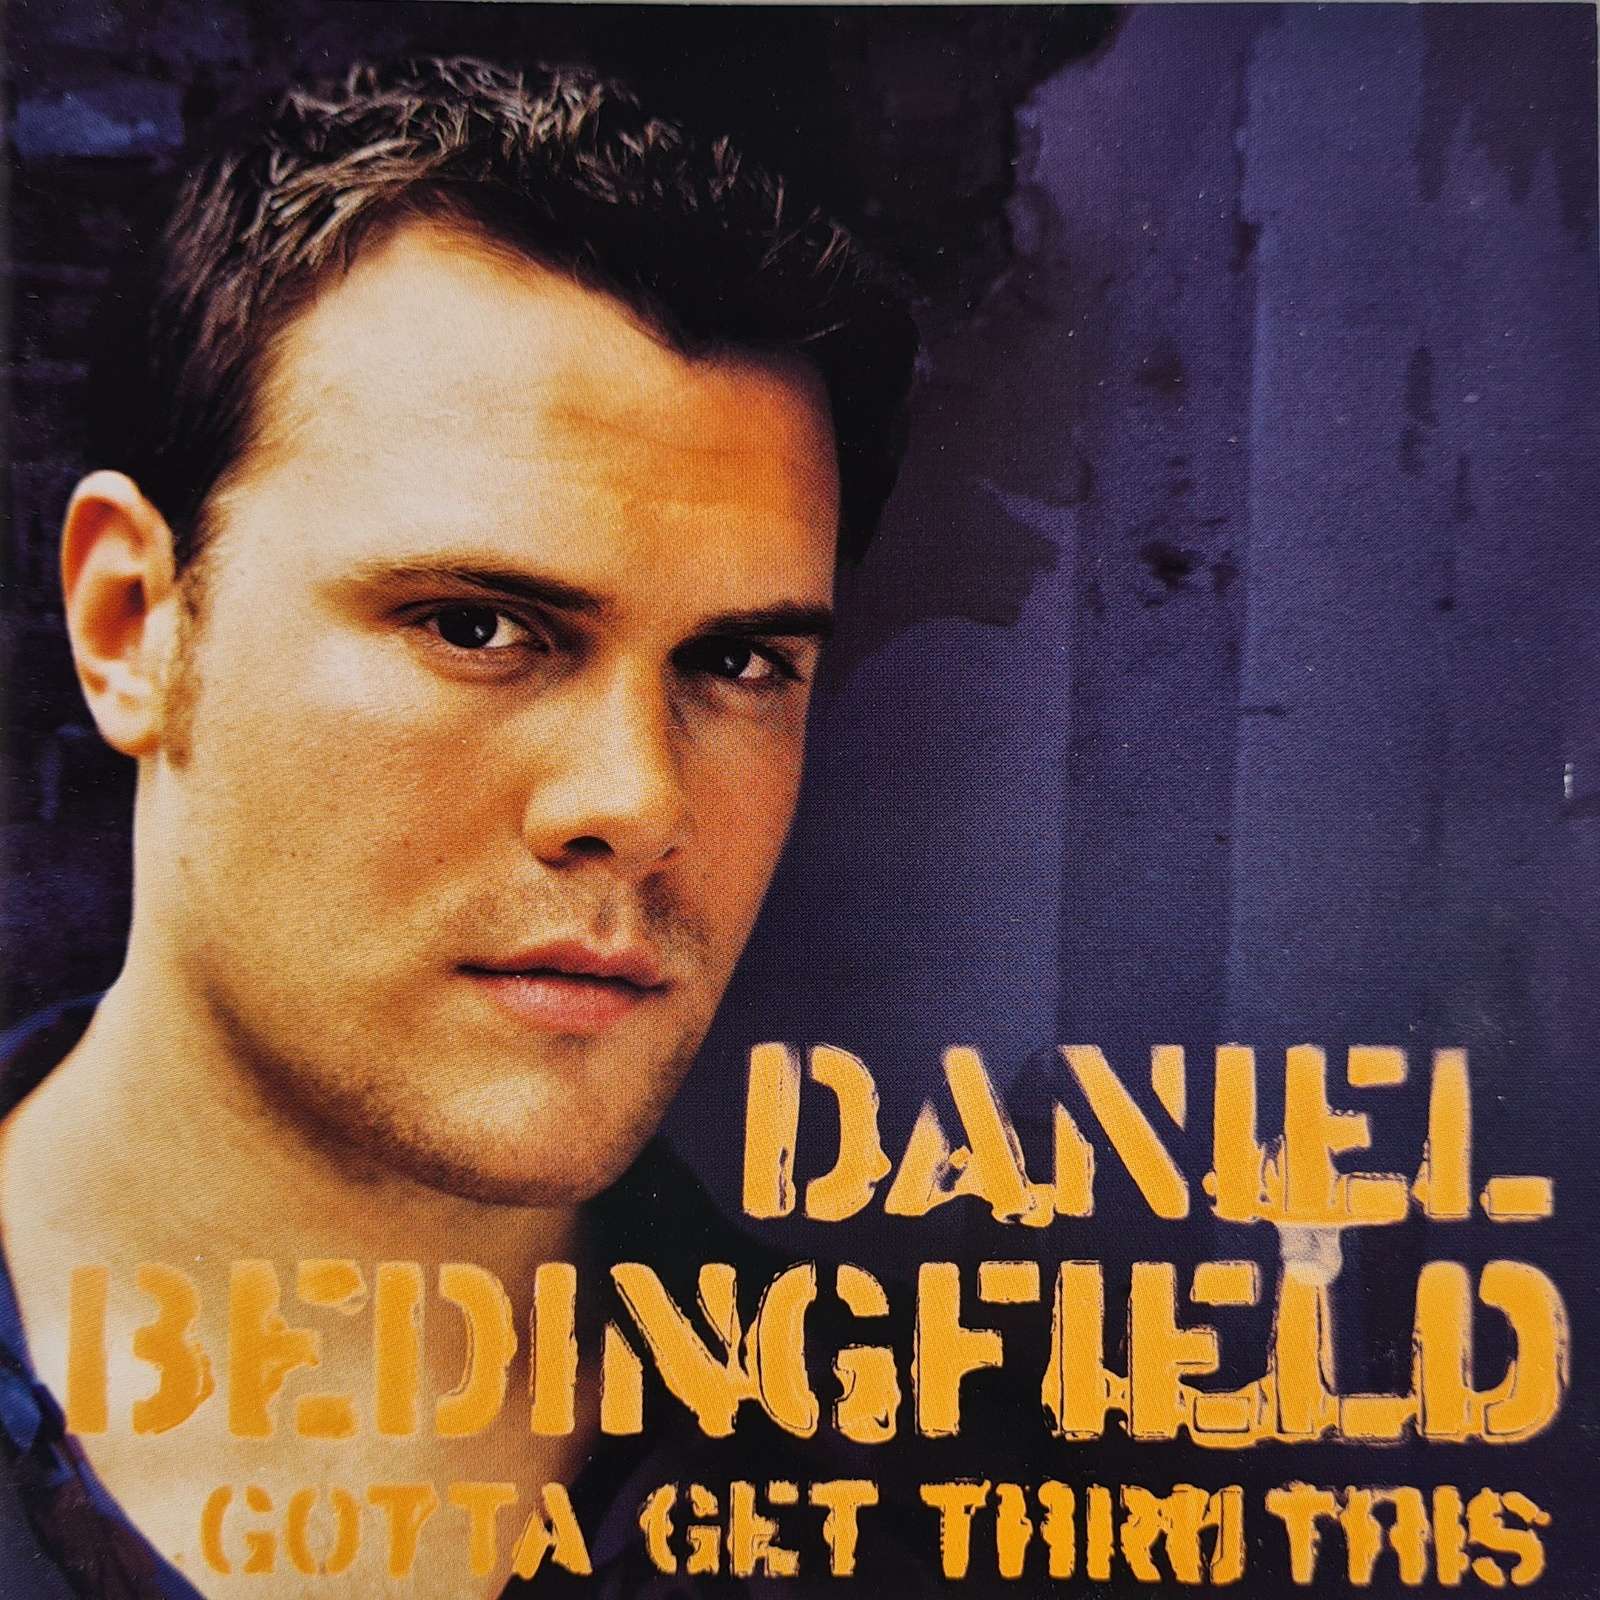 Daniel Bedingfield - Gotta Get Through This (CD)